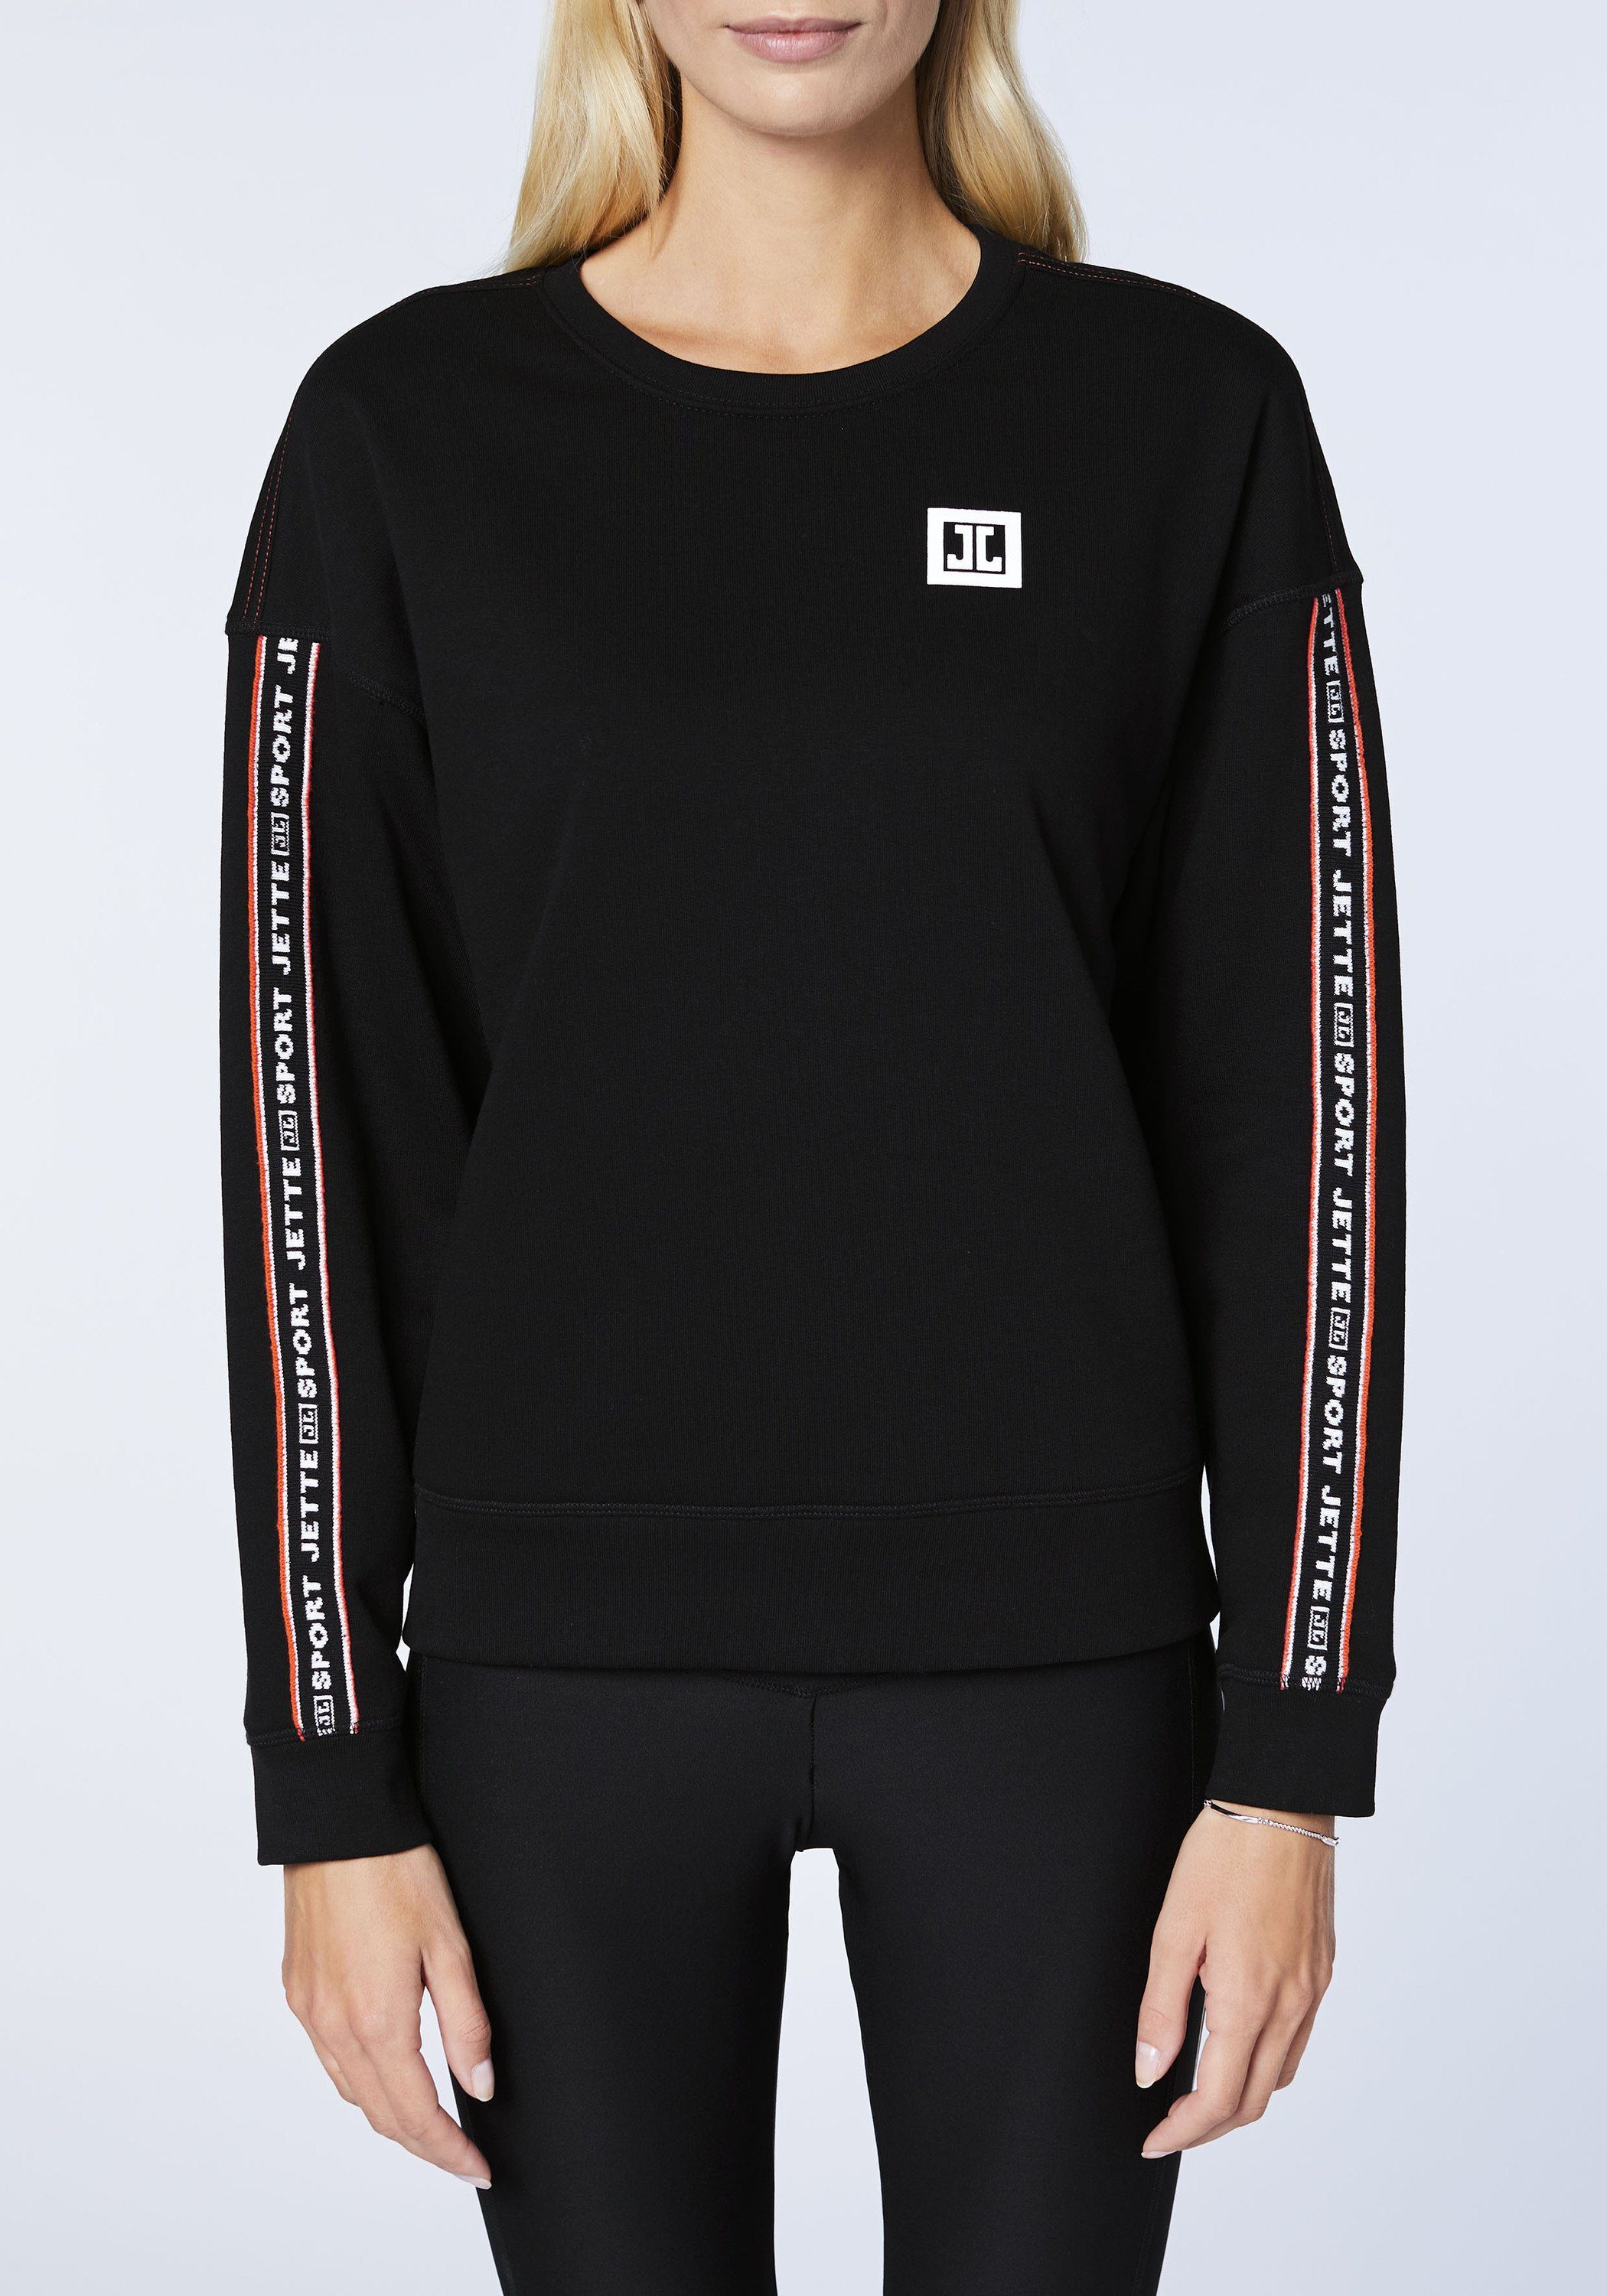 SPORT JETTE Label-Design Black Sweatshirt 19-3911 im Deep